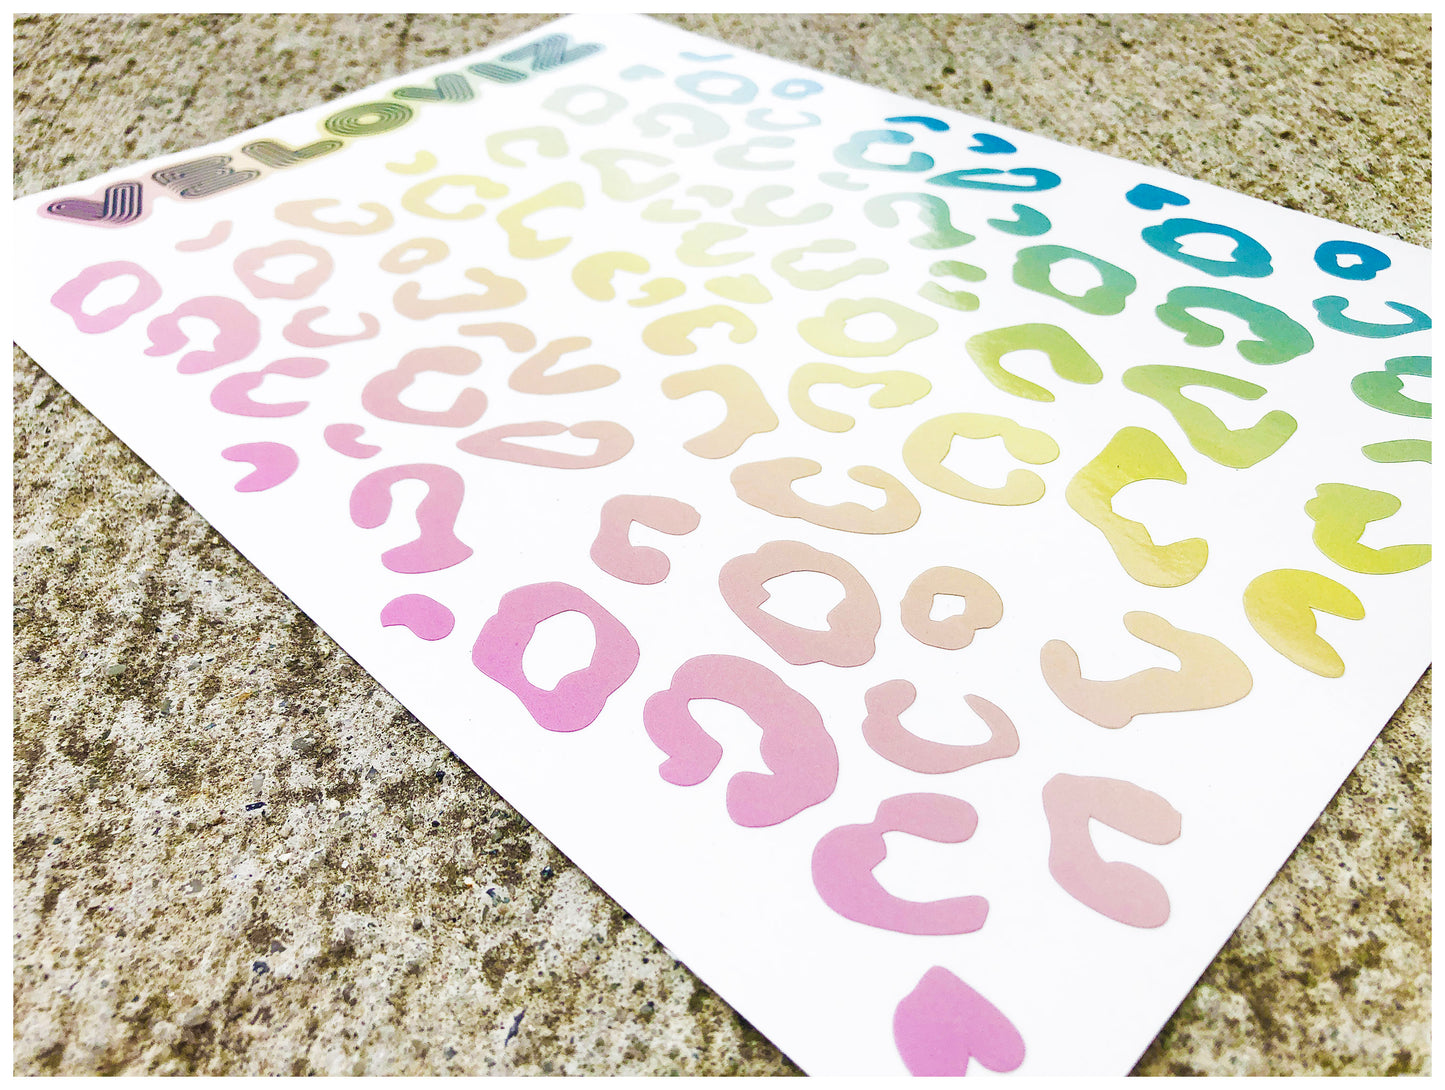 Reflective Leopard Print A4 Cargo Bike Stickers - Pastel Fade